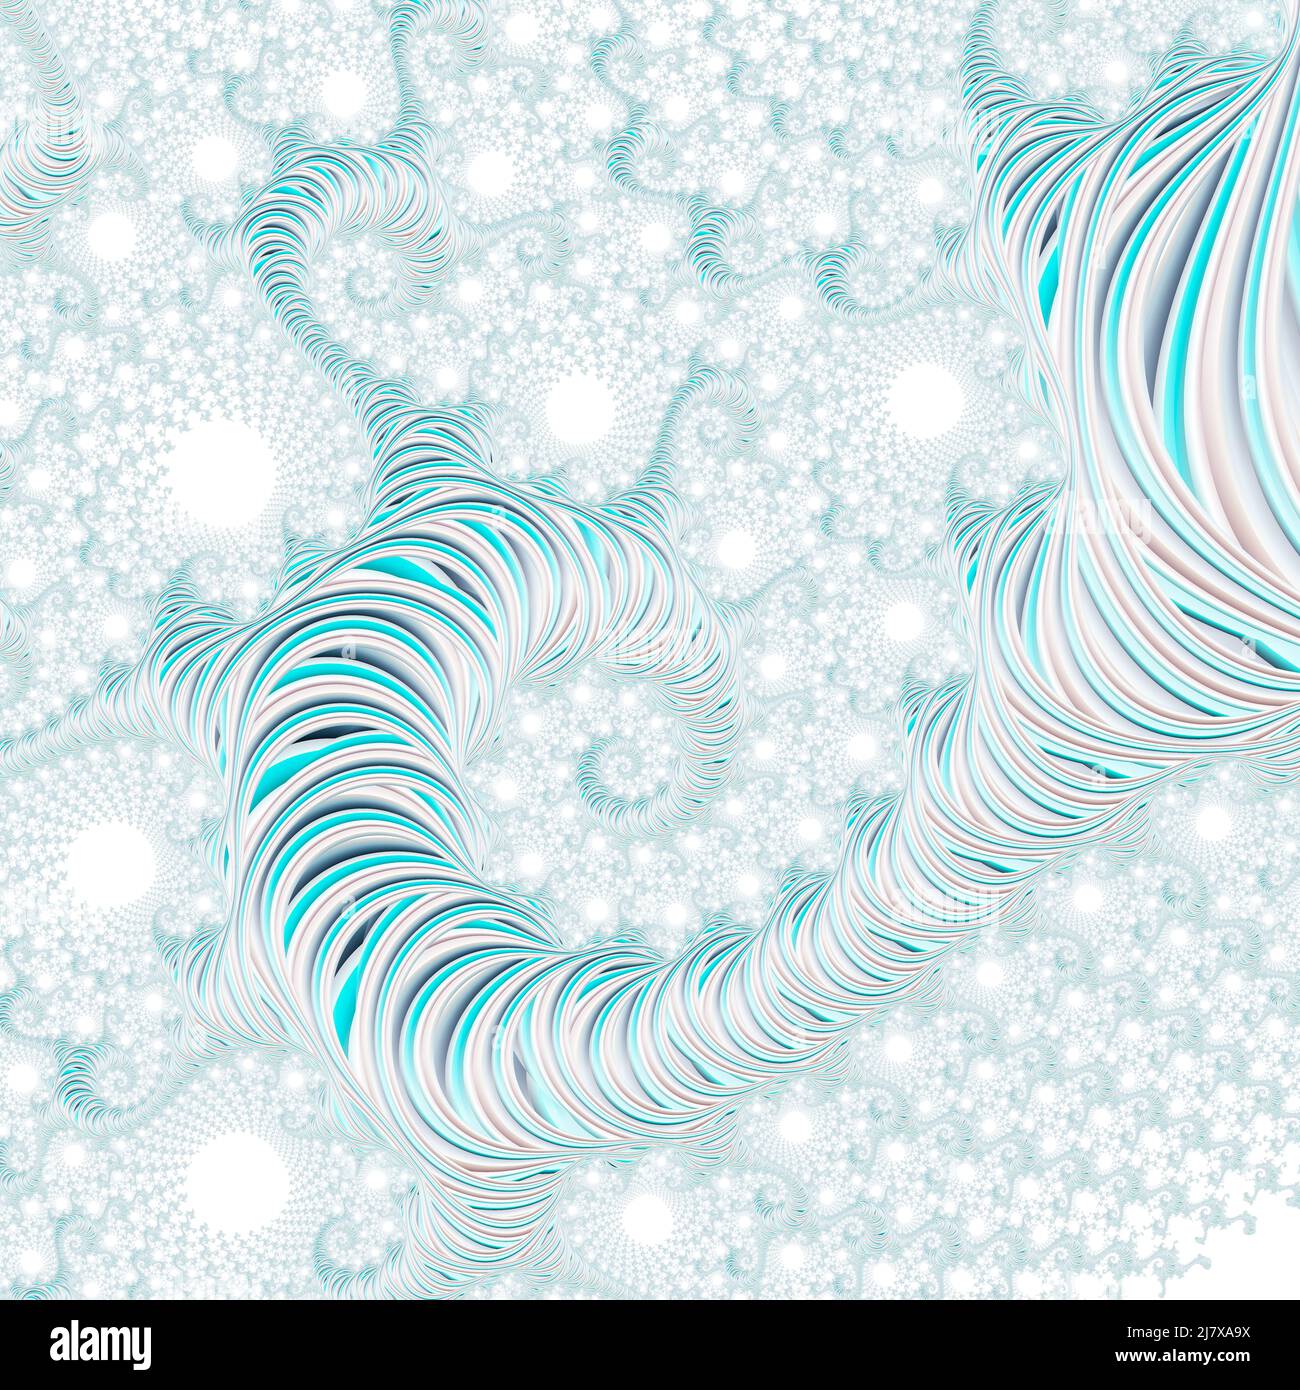 surreal futuristic digital 3d design art abstract background fractal illustration for meditation and decoration wallpaper Stock Photo